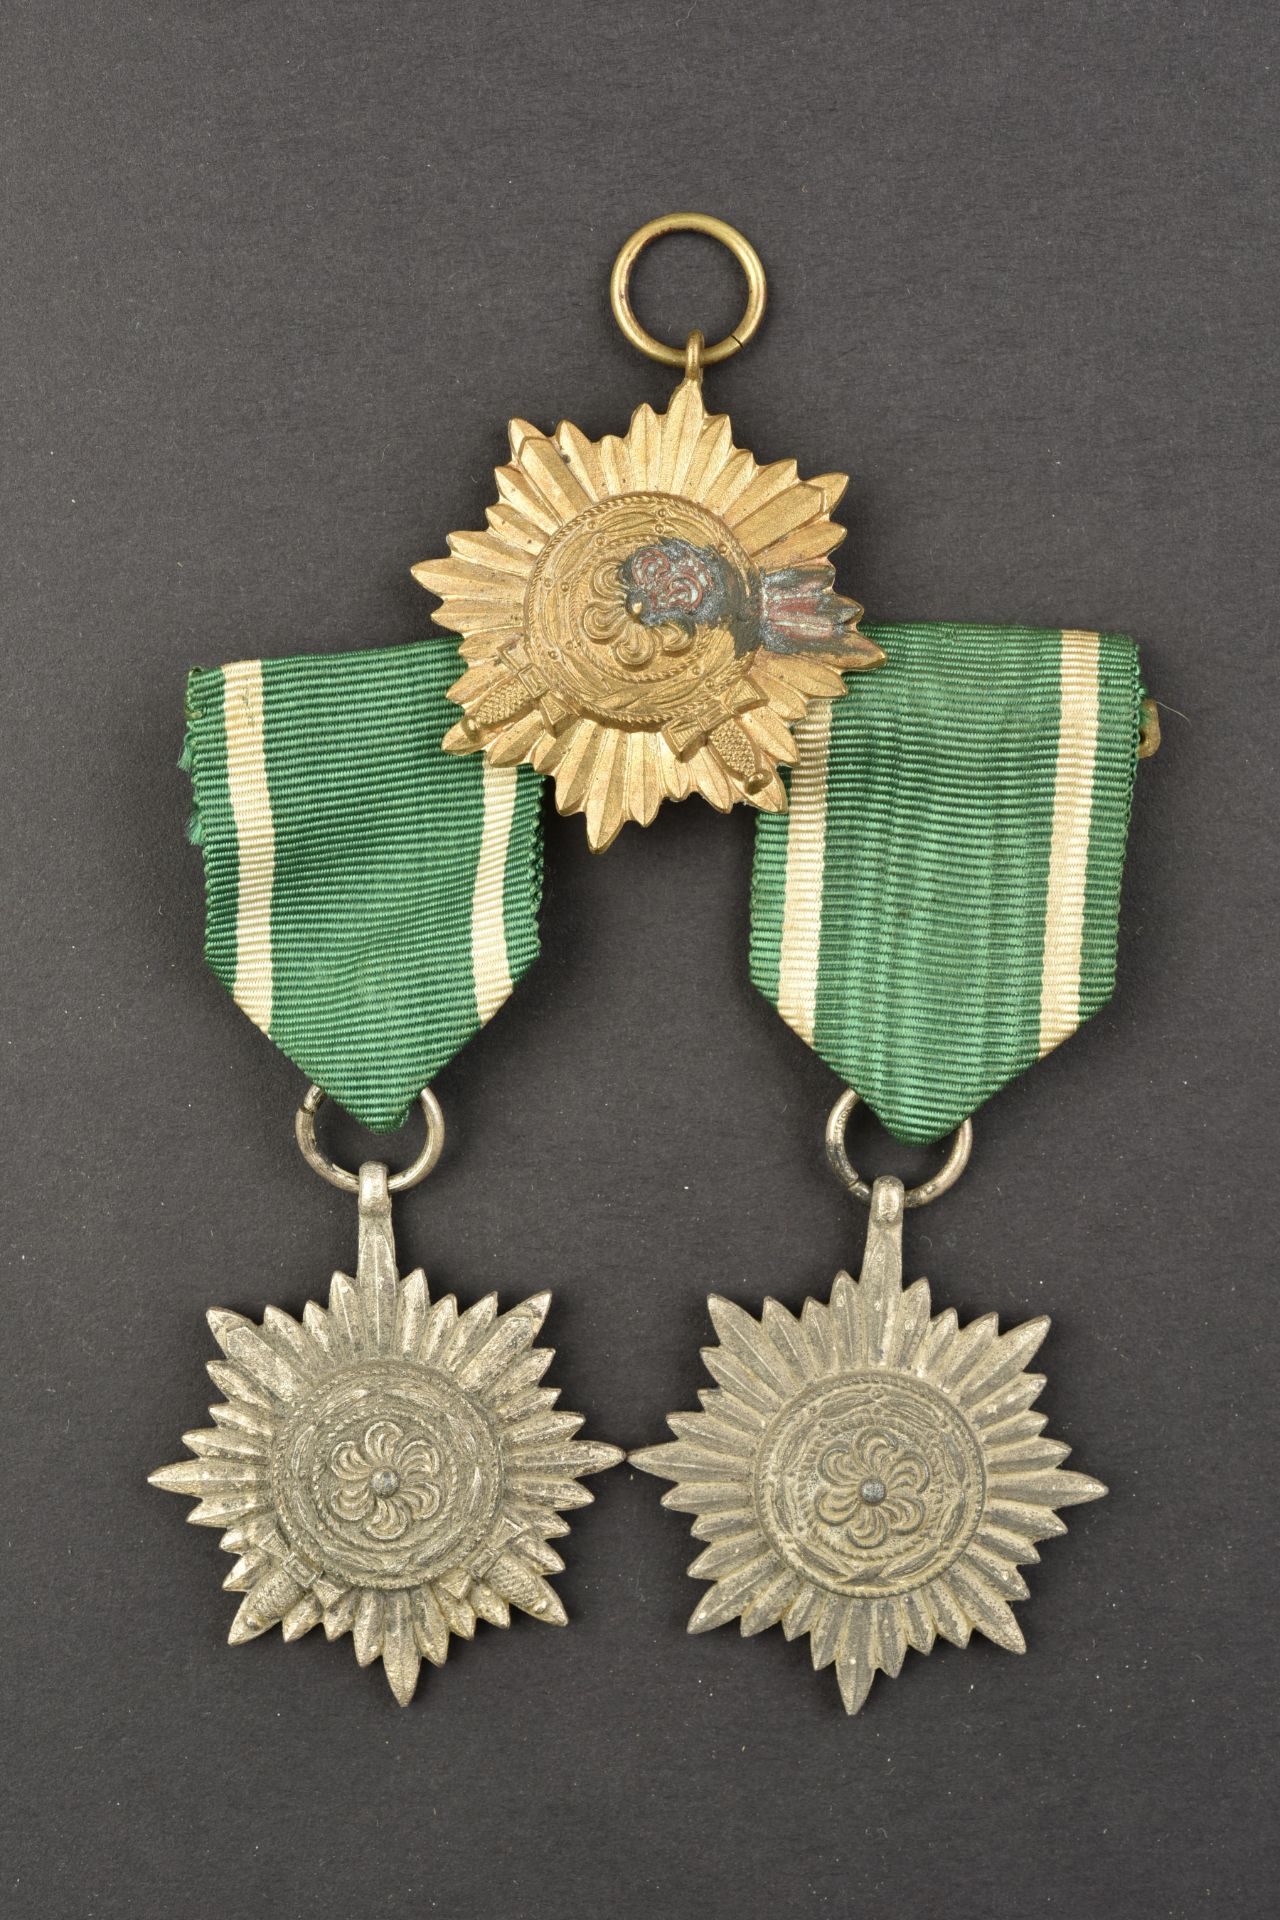 Medaille des volontaires de l Est. Eastern volunteer s medals.